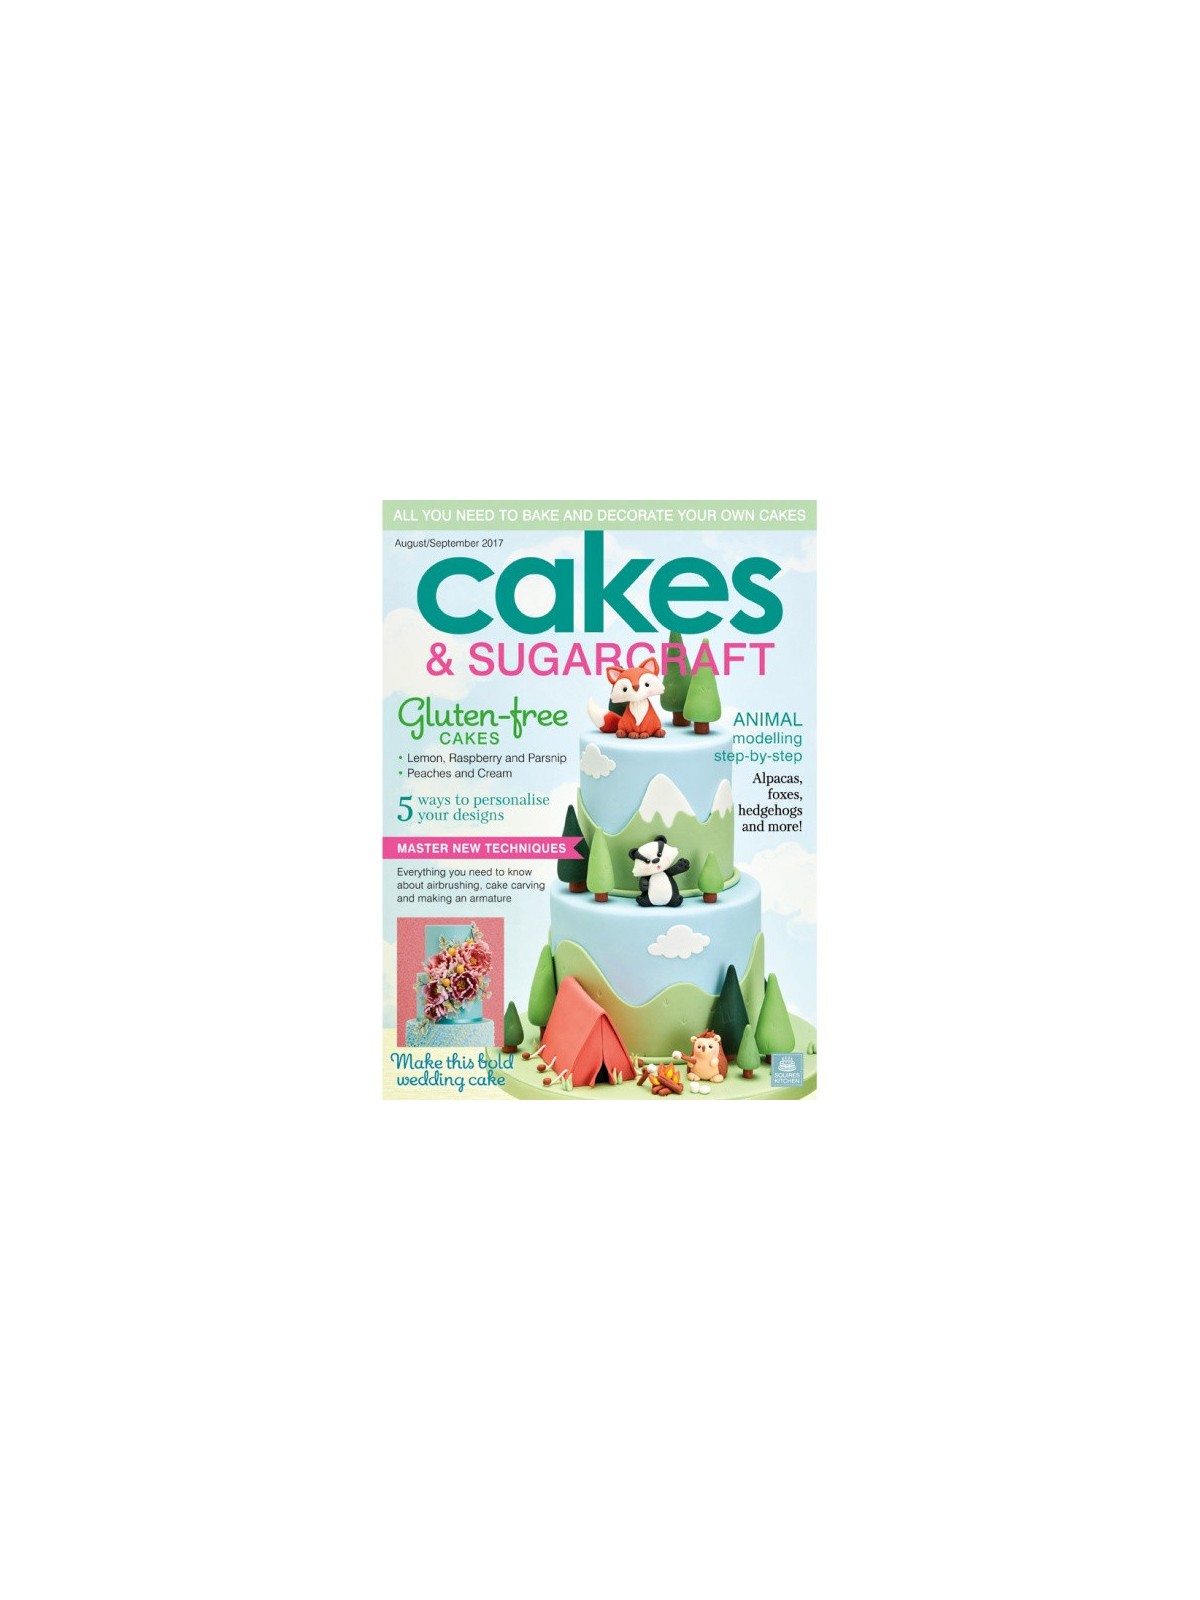 Cakes & Sugarcraft - august / september 2017